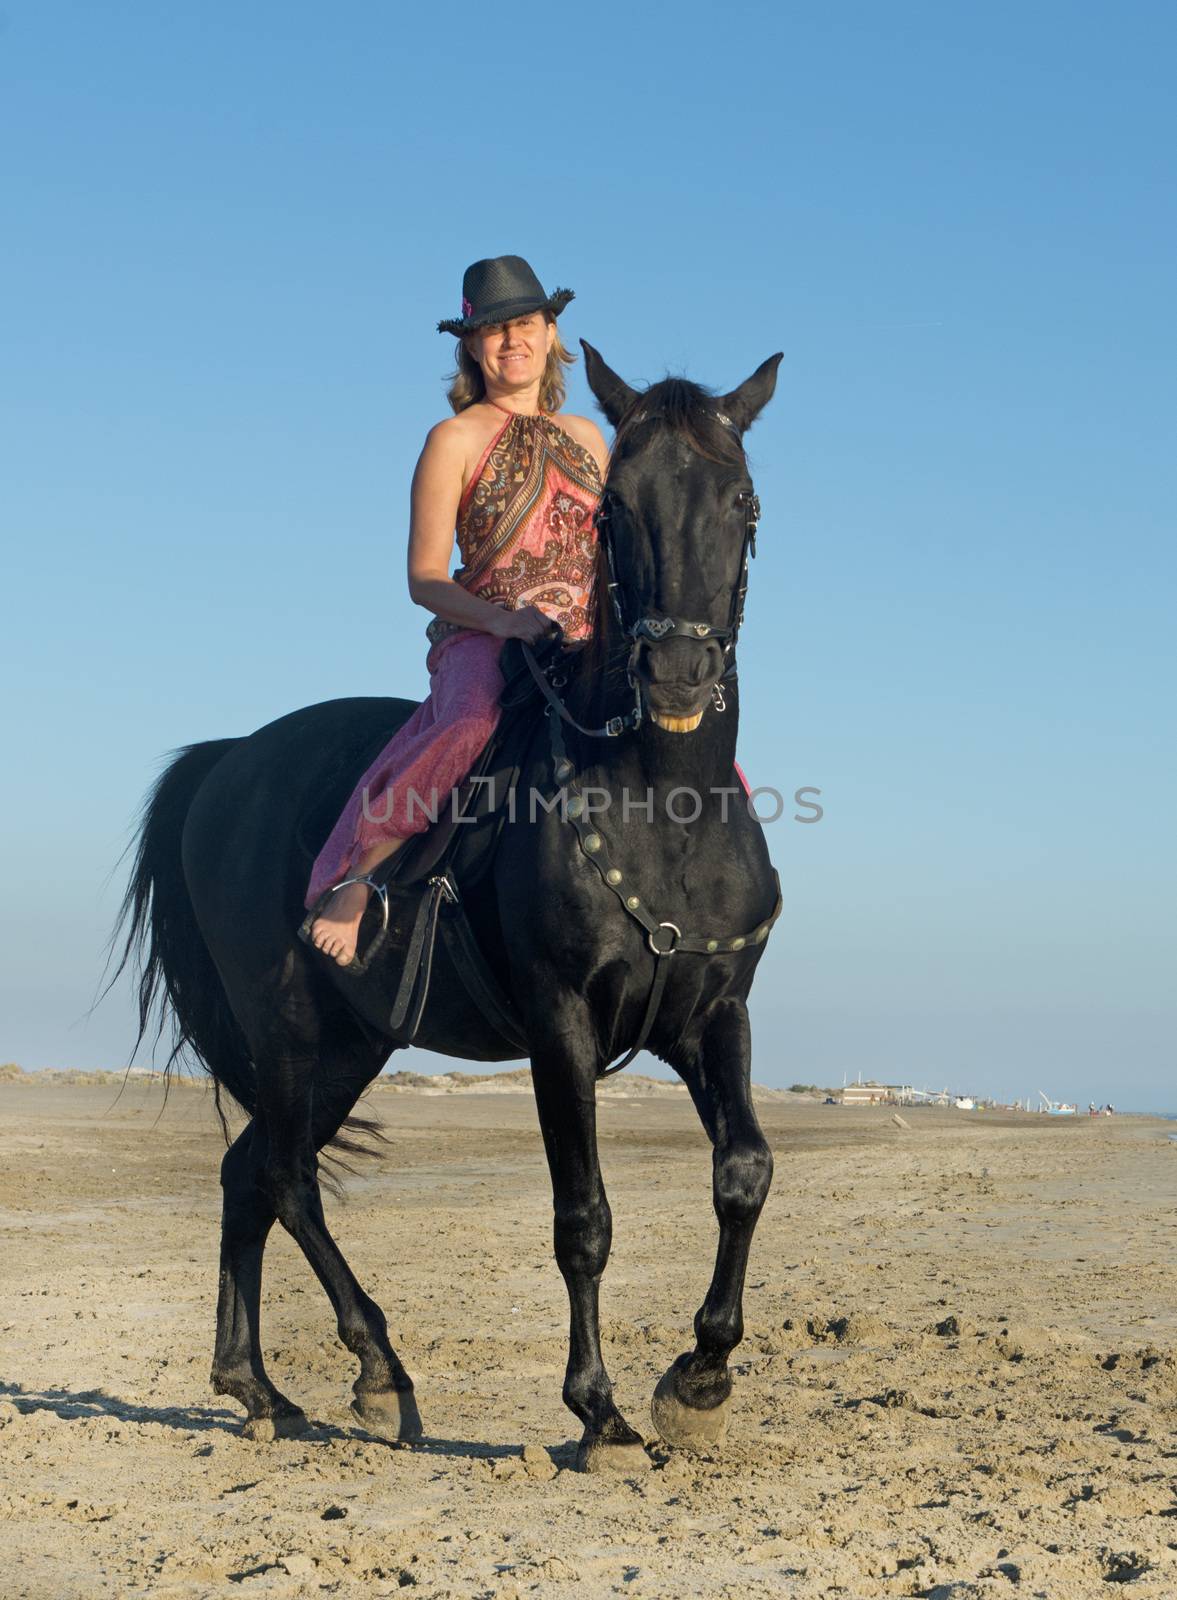 horse woman on the beach by cynoclub